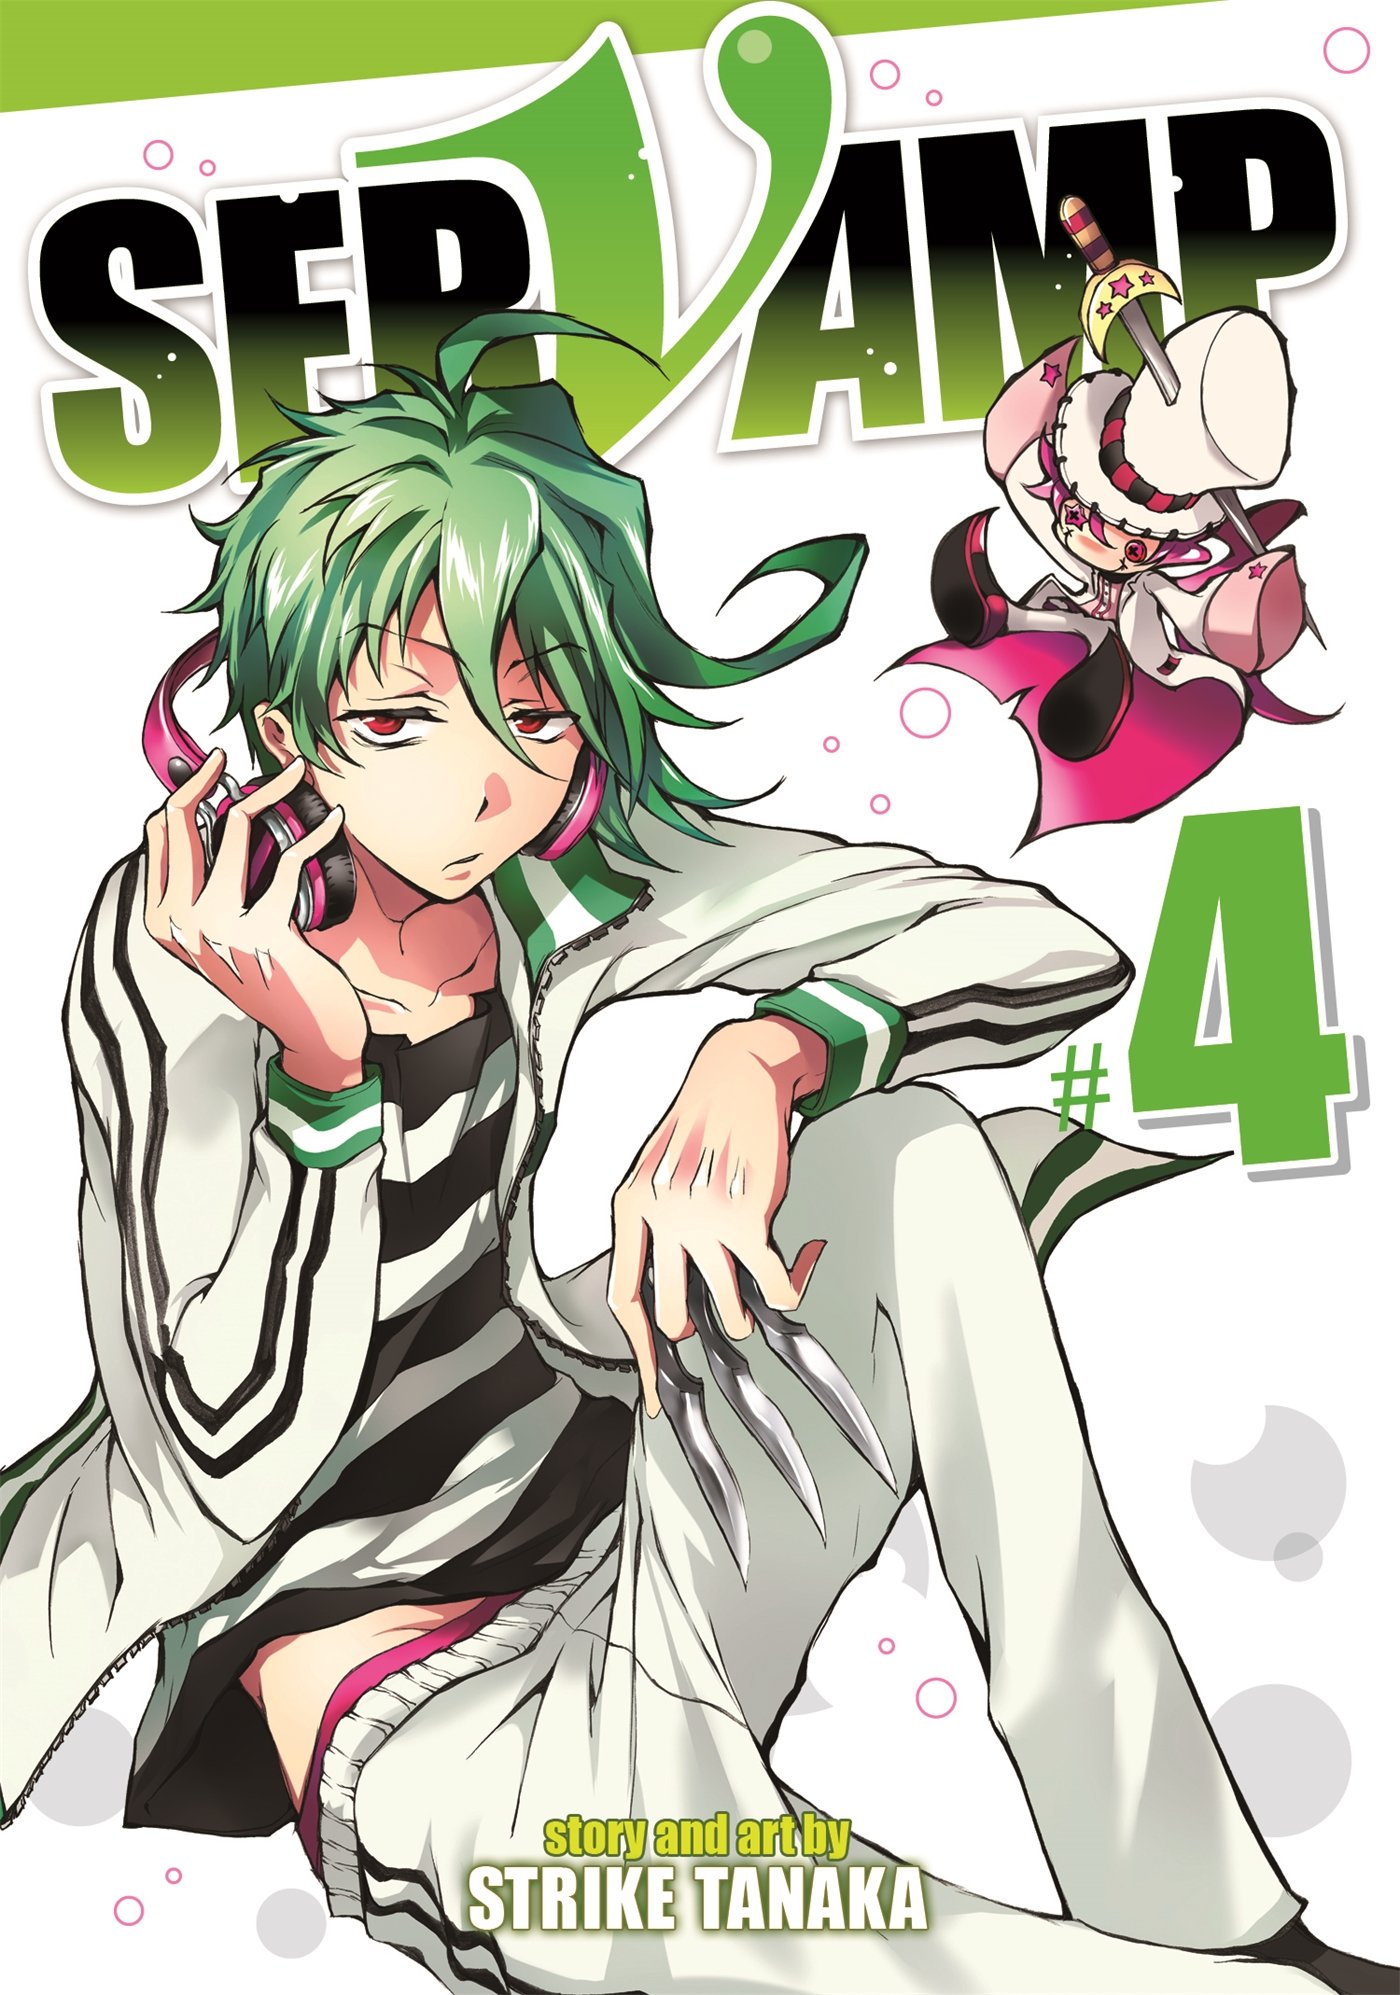 Servamp - Volume 4 | Strike Tanaka